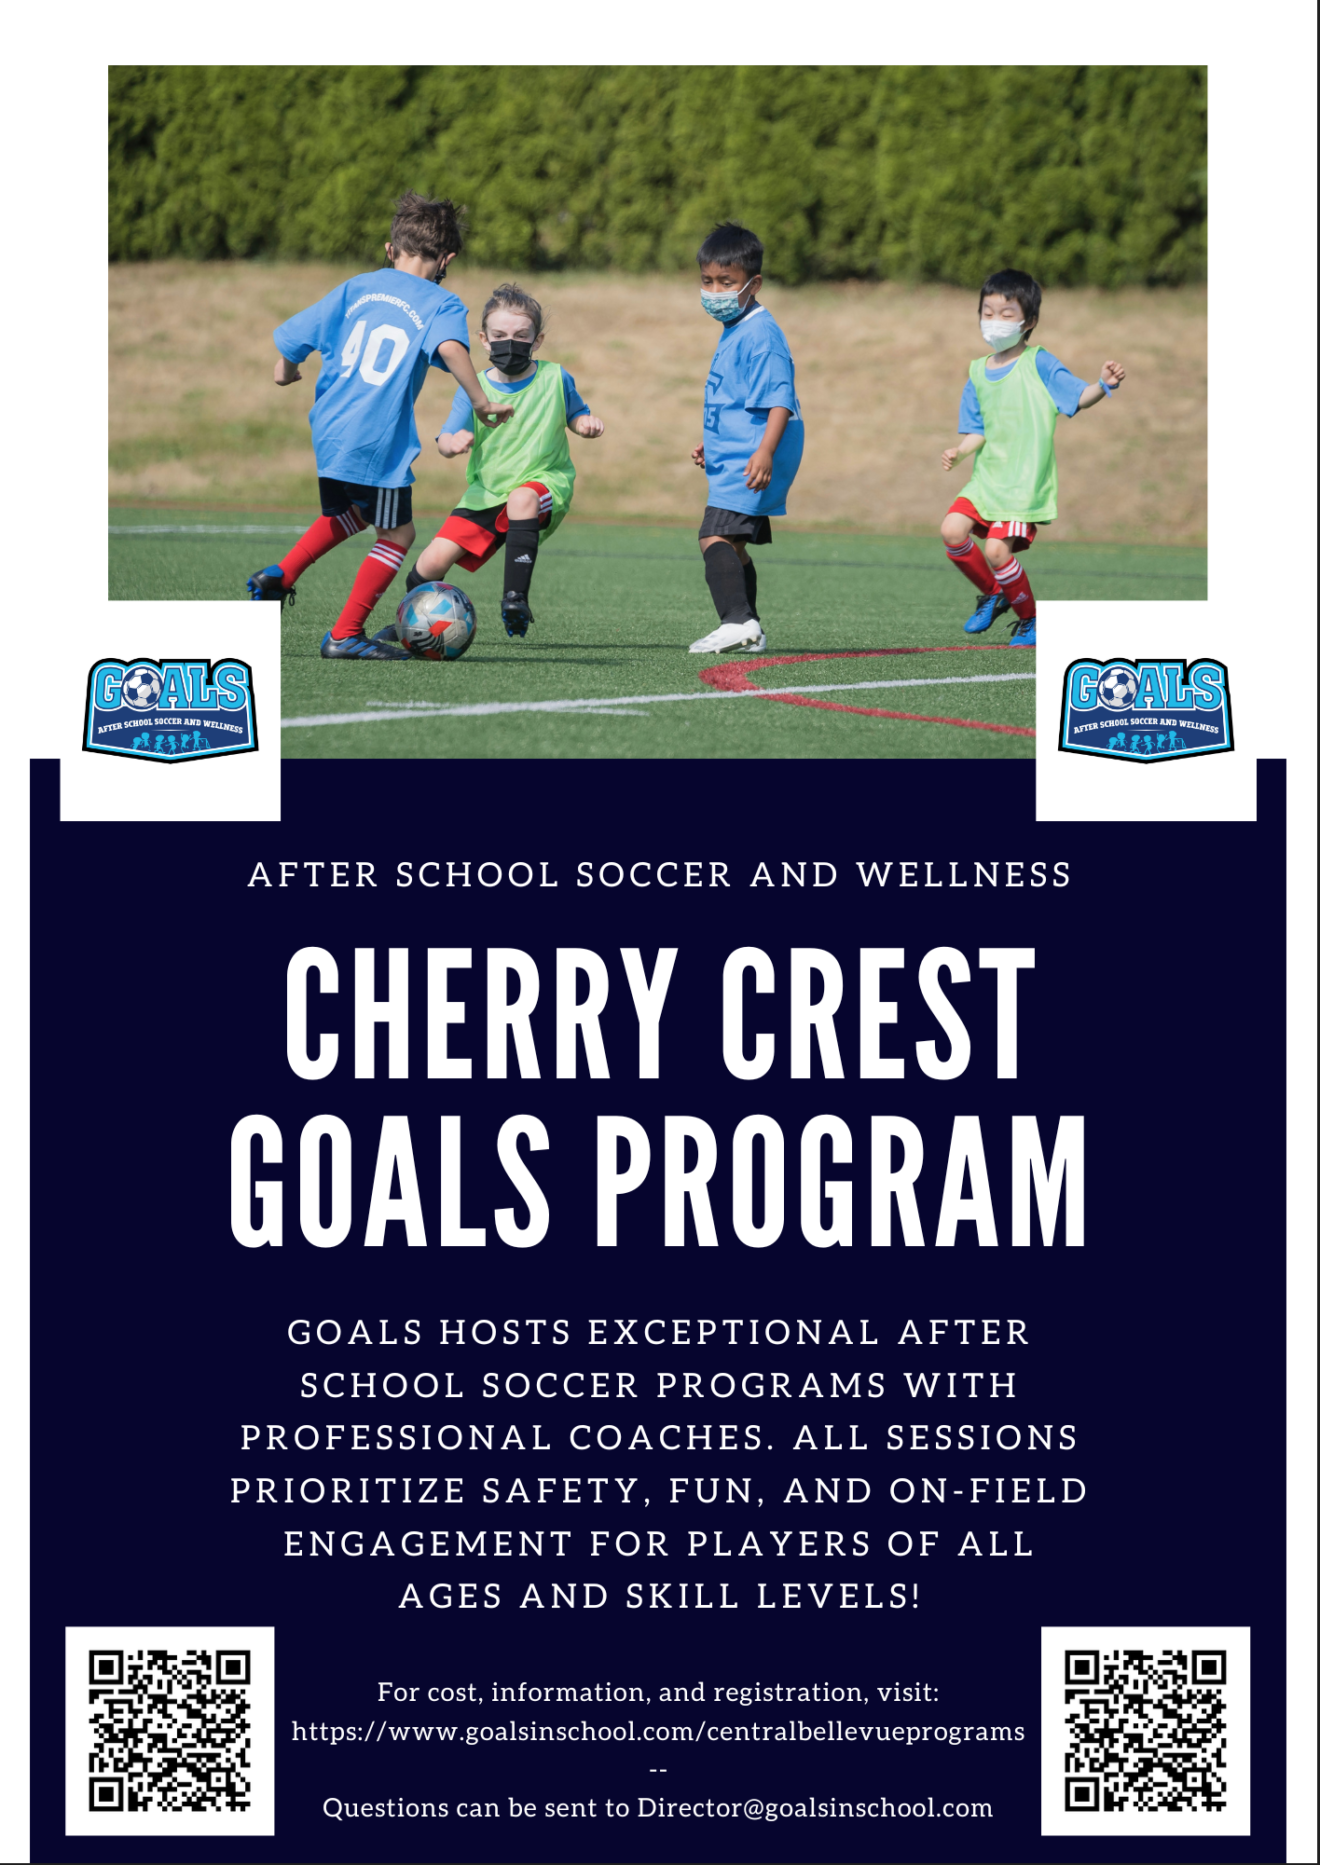 GOAL Soccer starts 3/22 at Cherry Crest